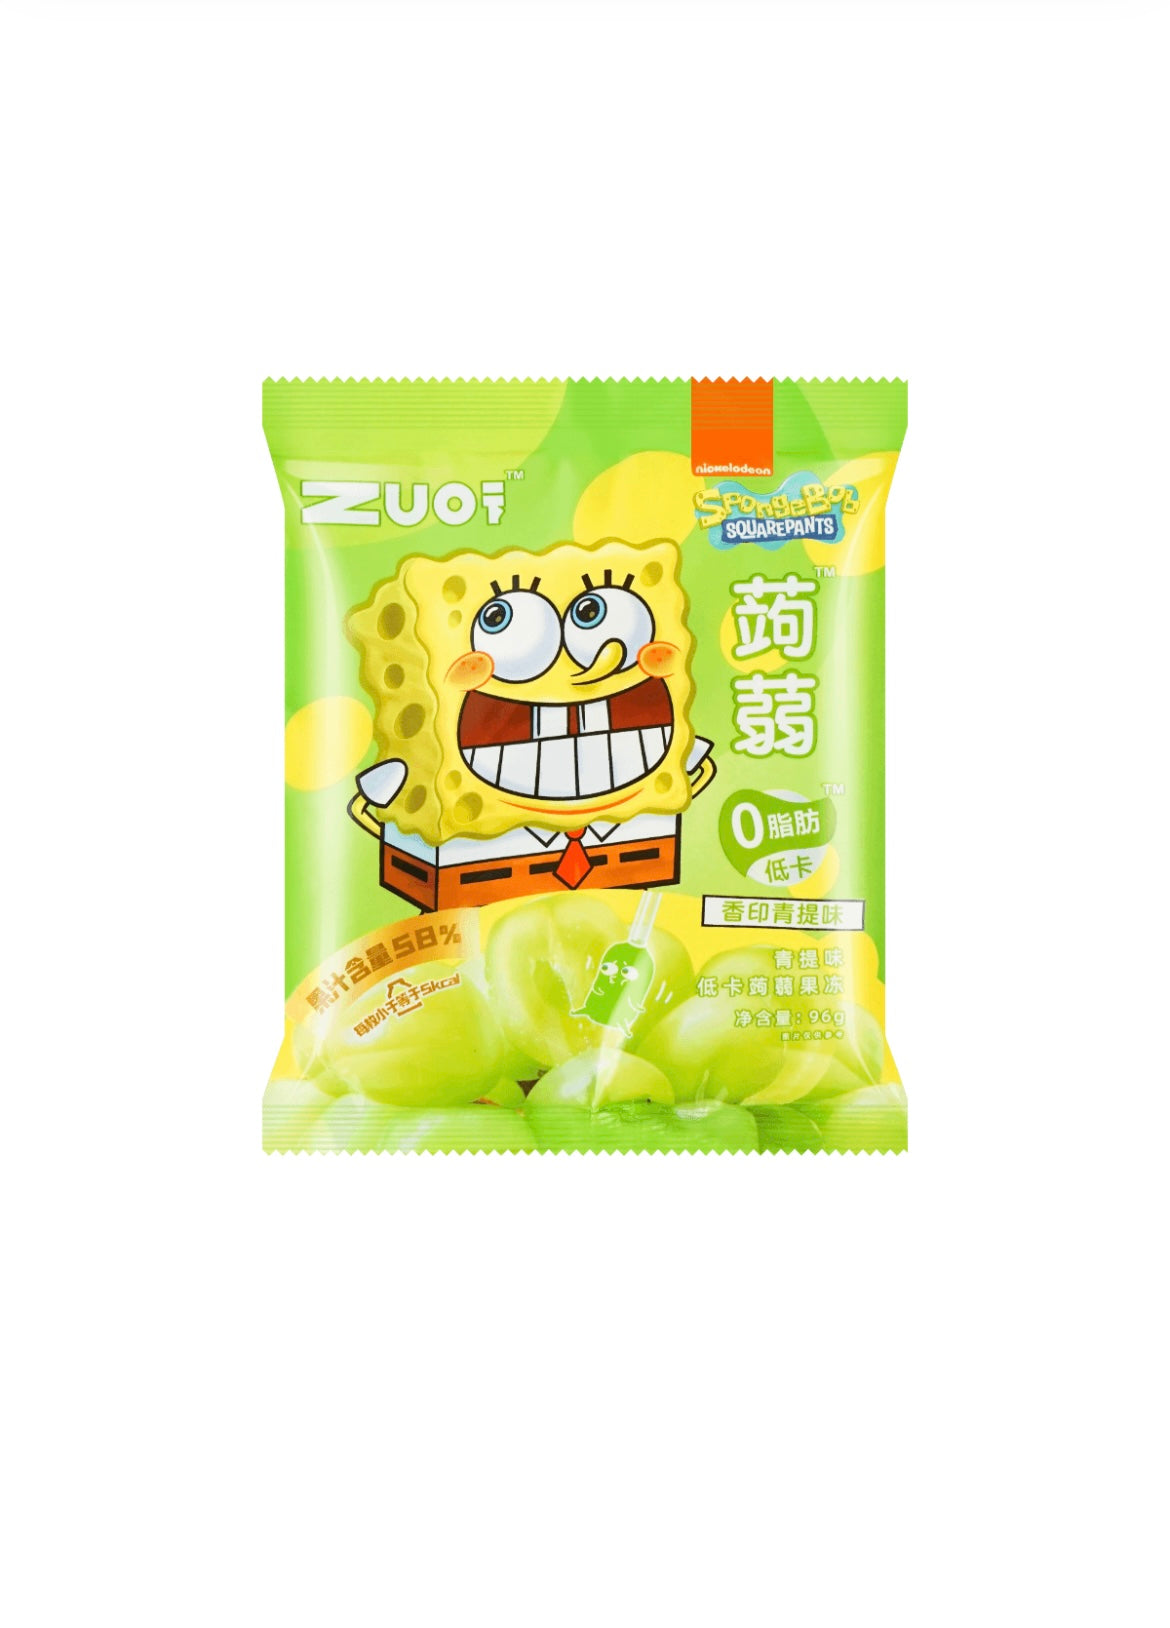 Spongebob Green Grape Jelly Packs(China)